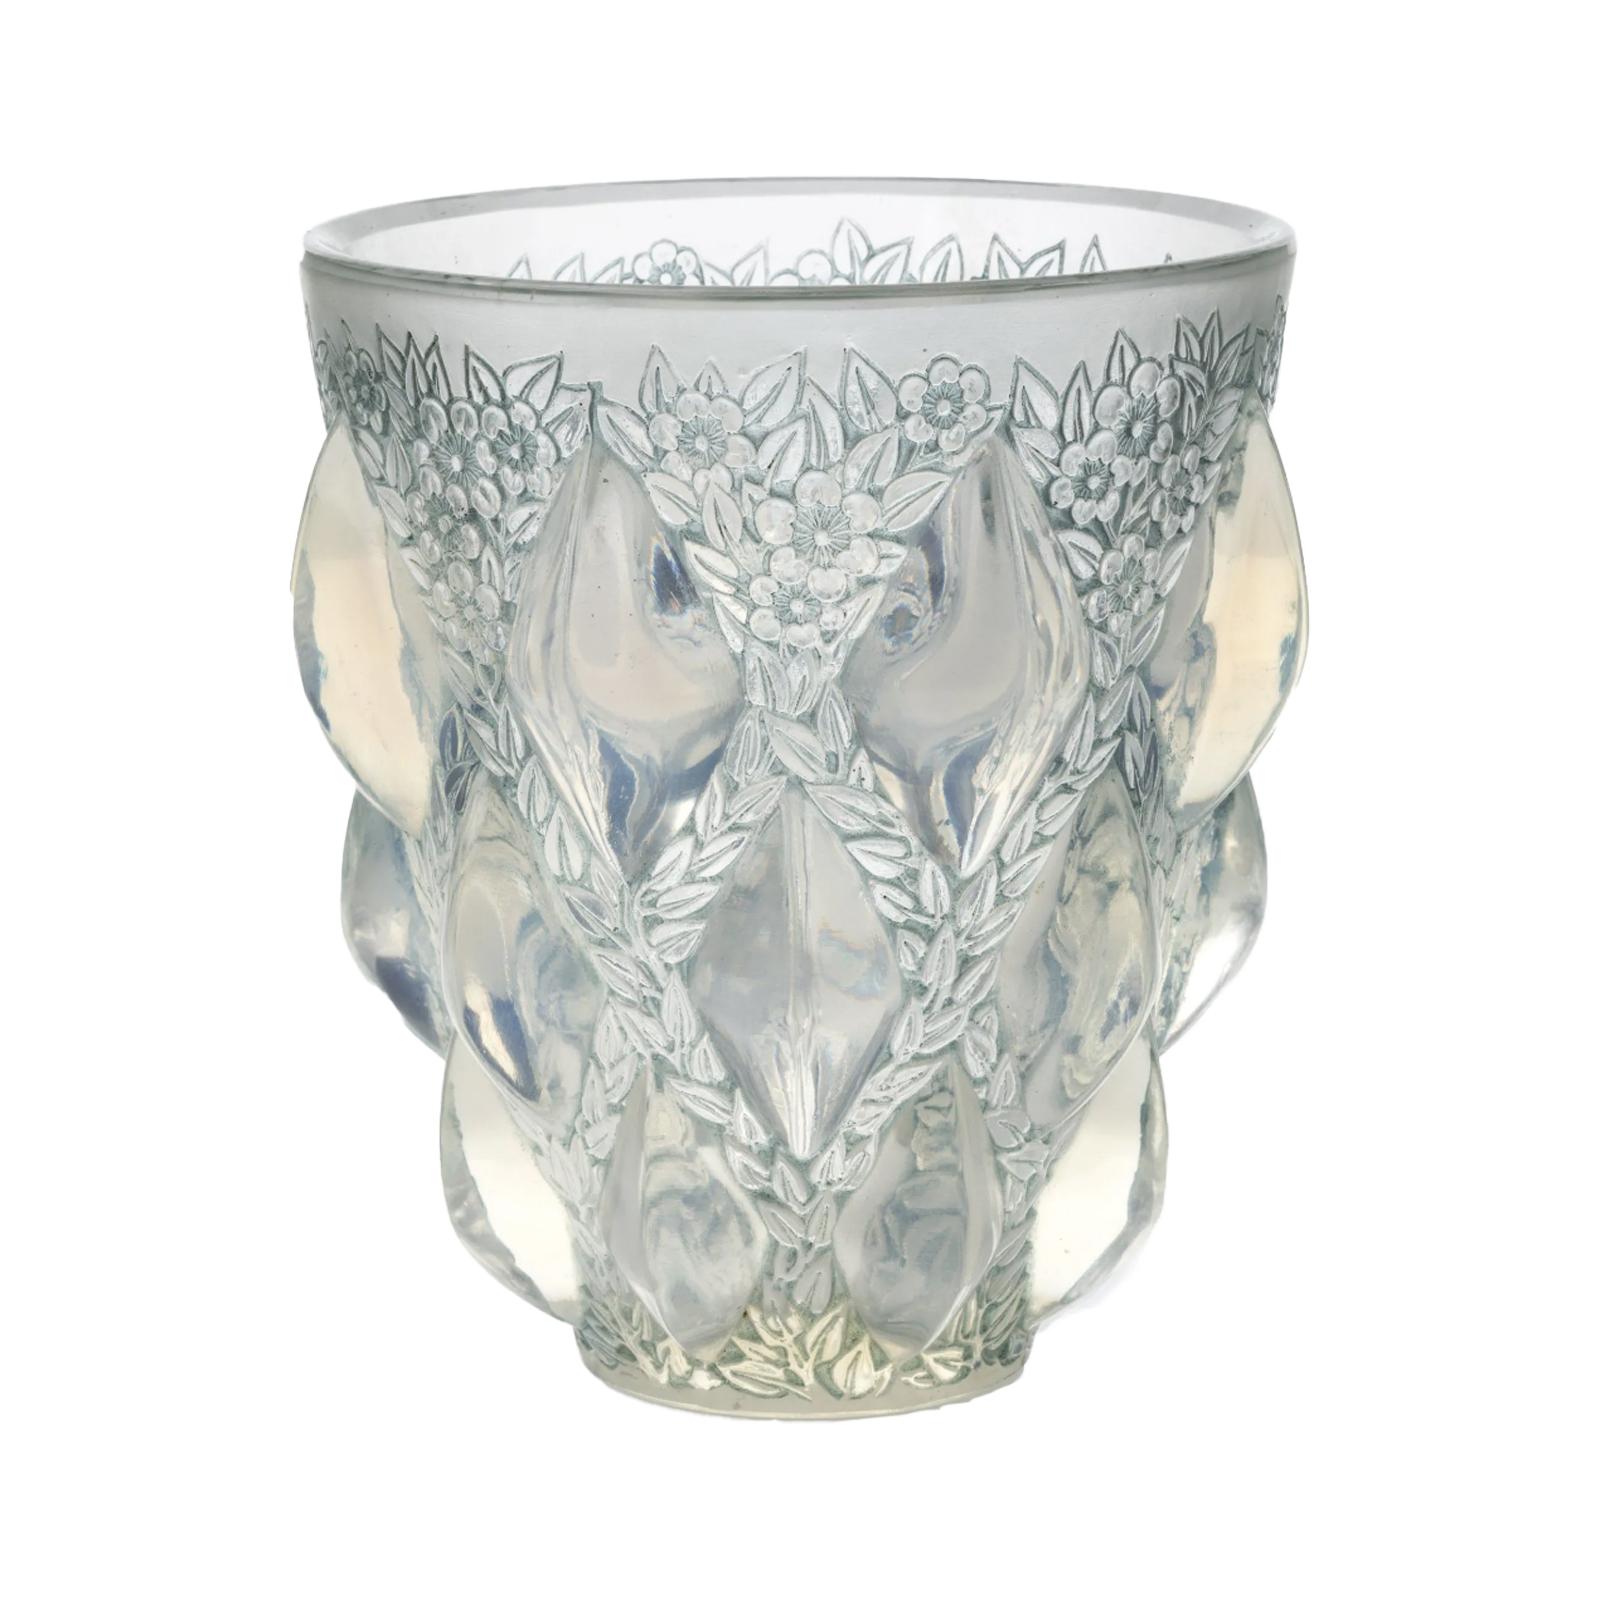 René Lalique (Aÿ, 1860-1945, Paris) Rampillon Vase,
model created in 1927 also called 